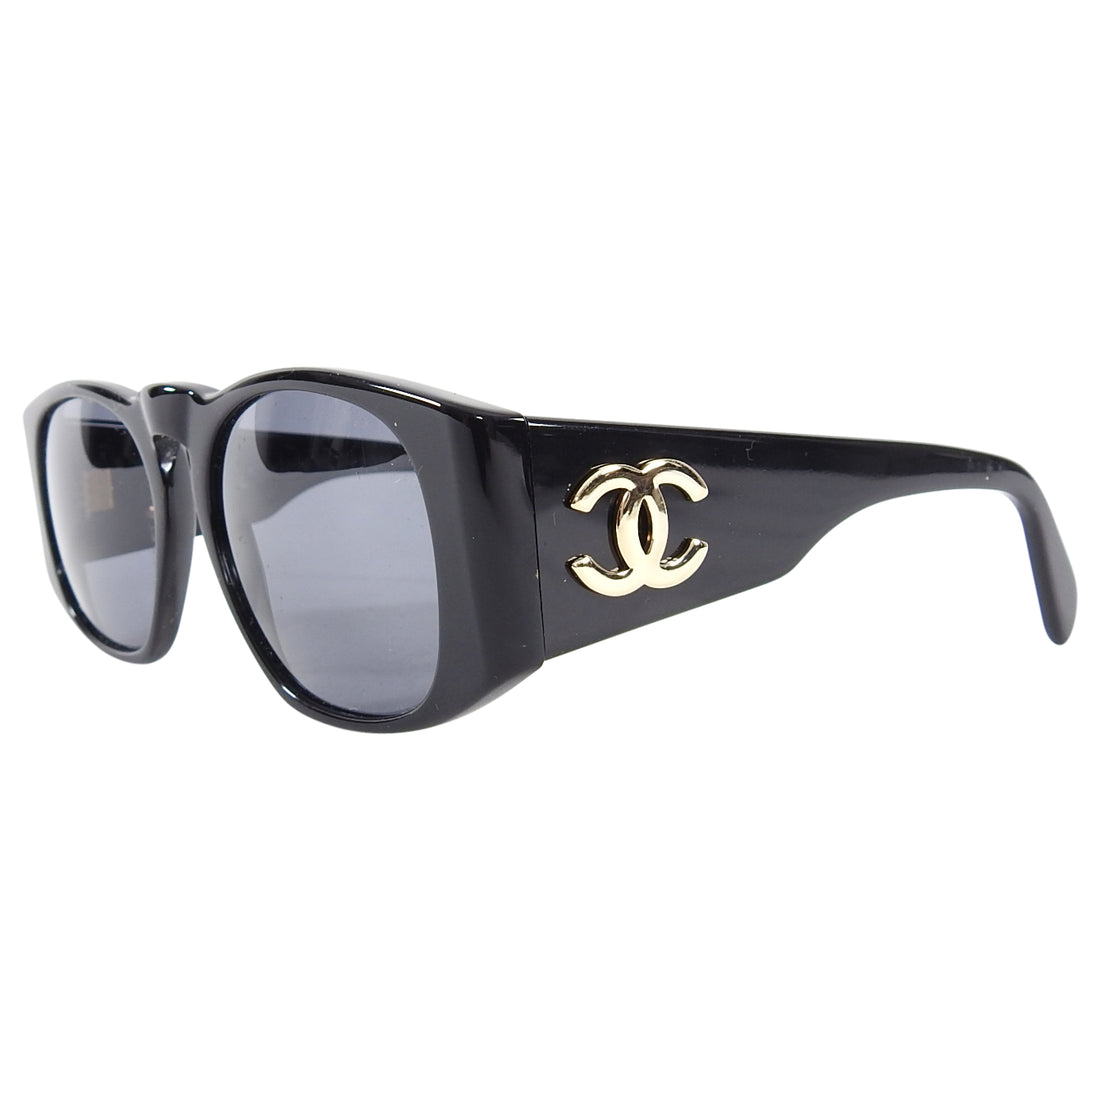 ❌SOLD❌ BNIB Chanel heart logo sunglasses